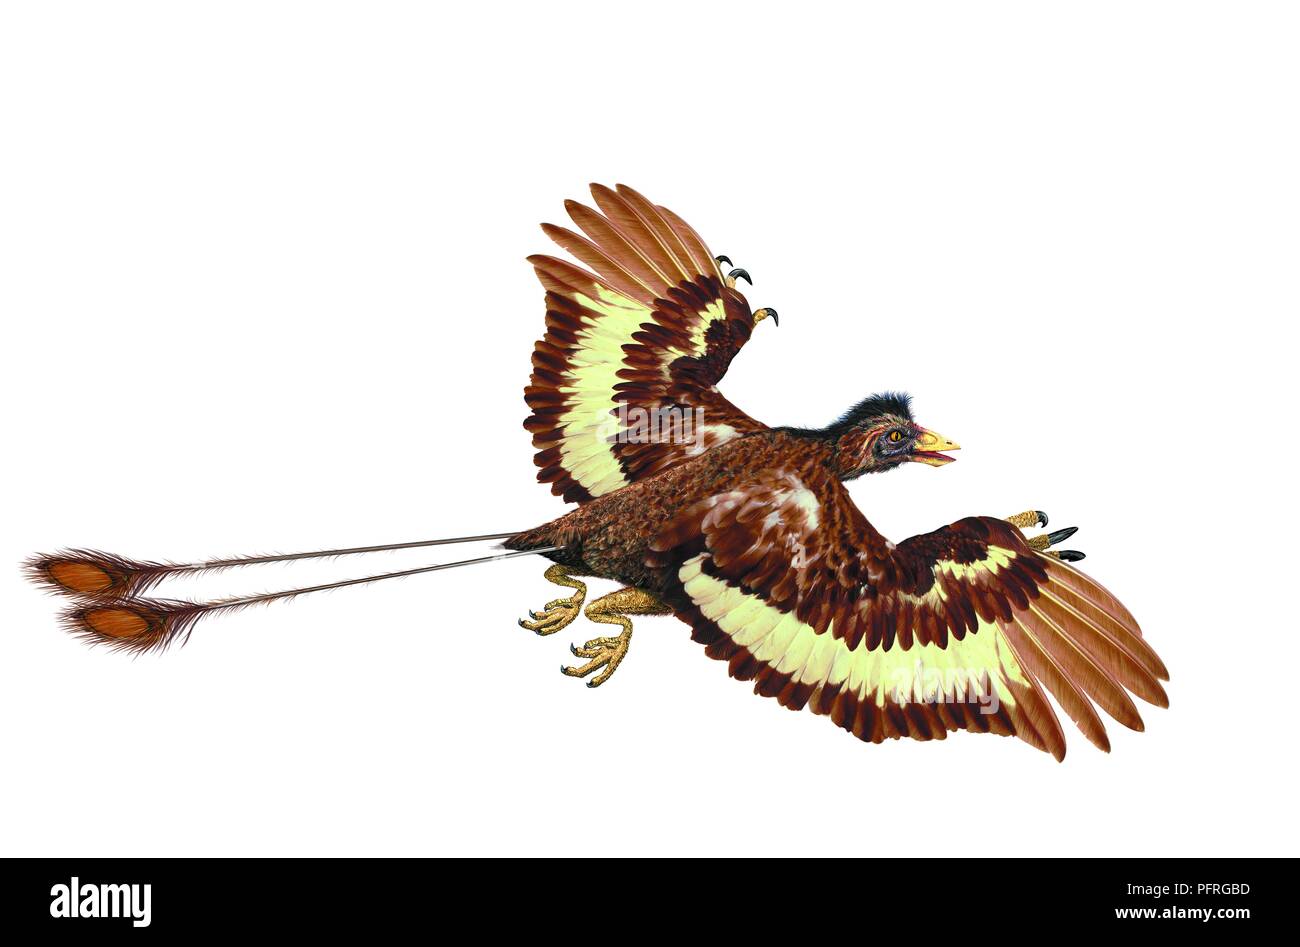 Confuciusornis, pre-historic bird, early Cretaceous era Stock Photo